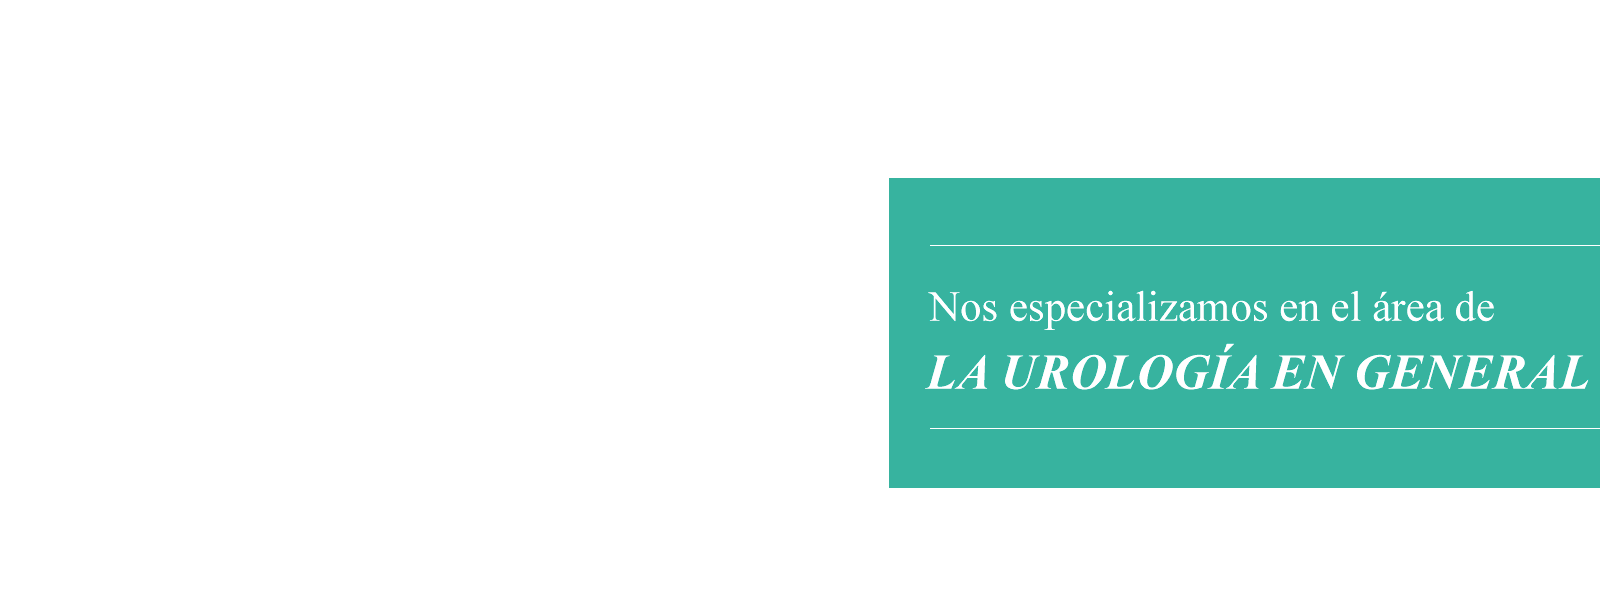 Urología Dr. Melchor y Dr. Iglesias banner